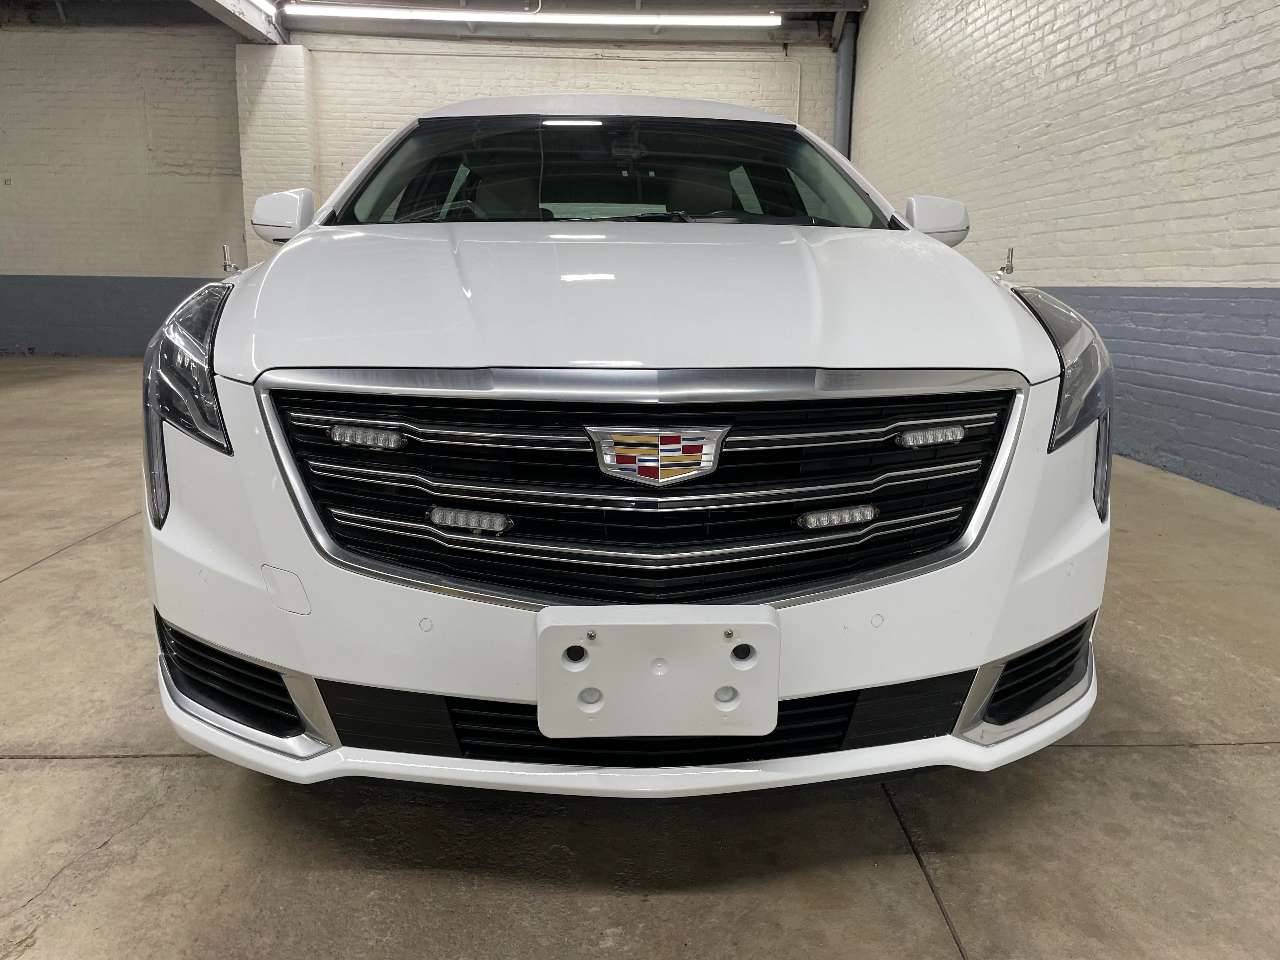 2019 Cadillac Eagle Kingsley Limousine 1695743845255